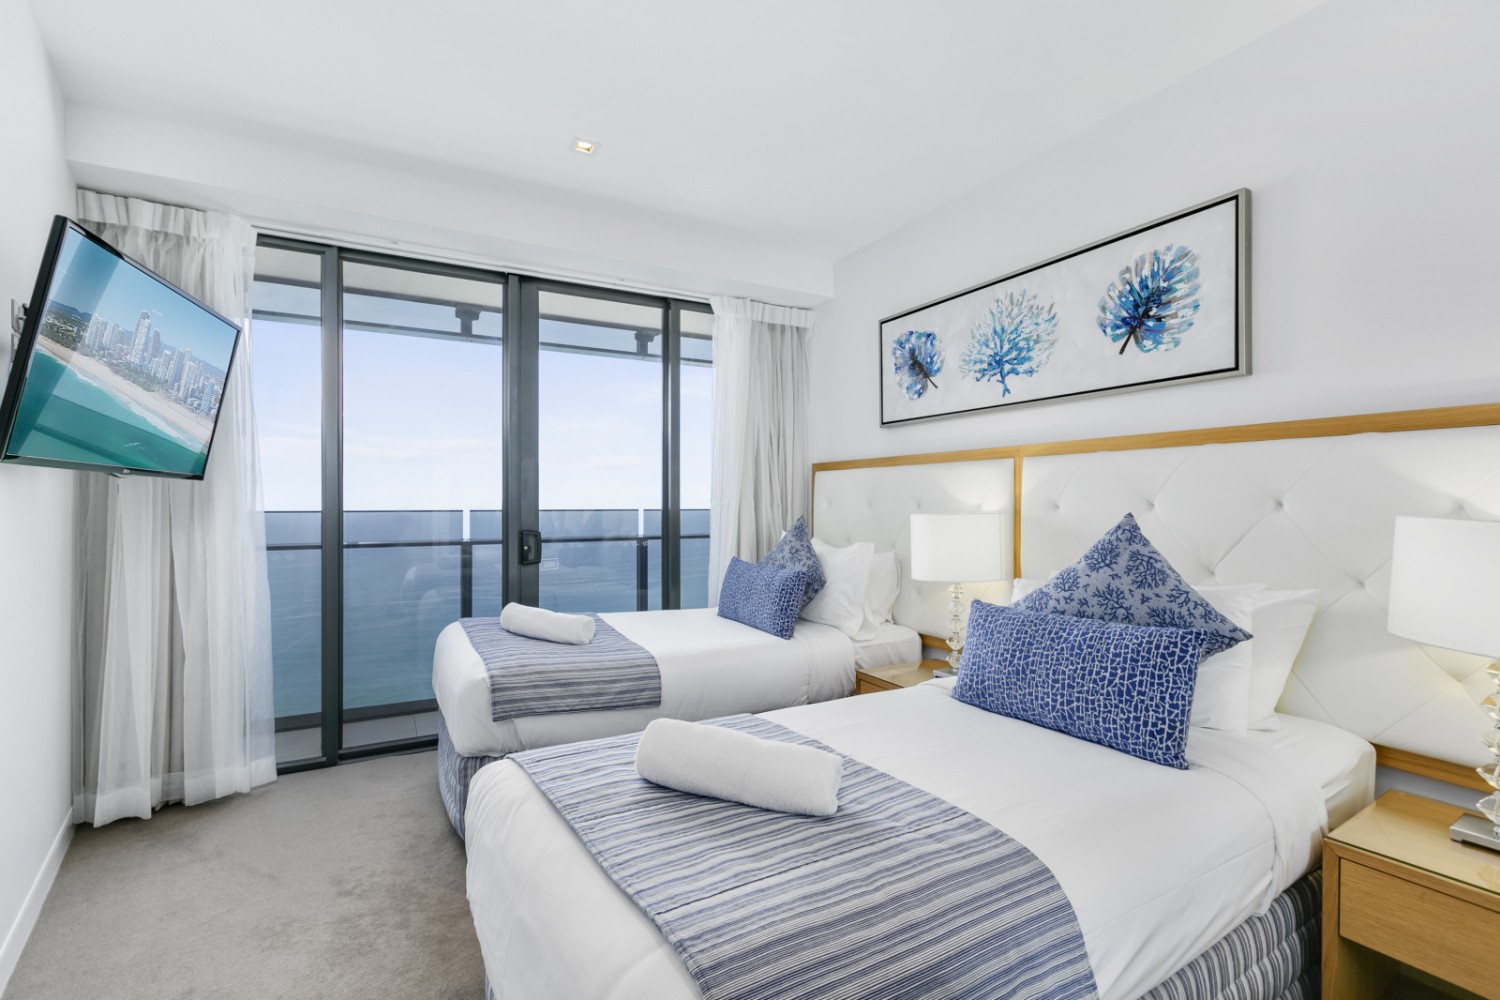 Second Bedroom with ocean views